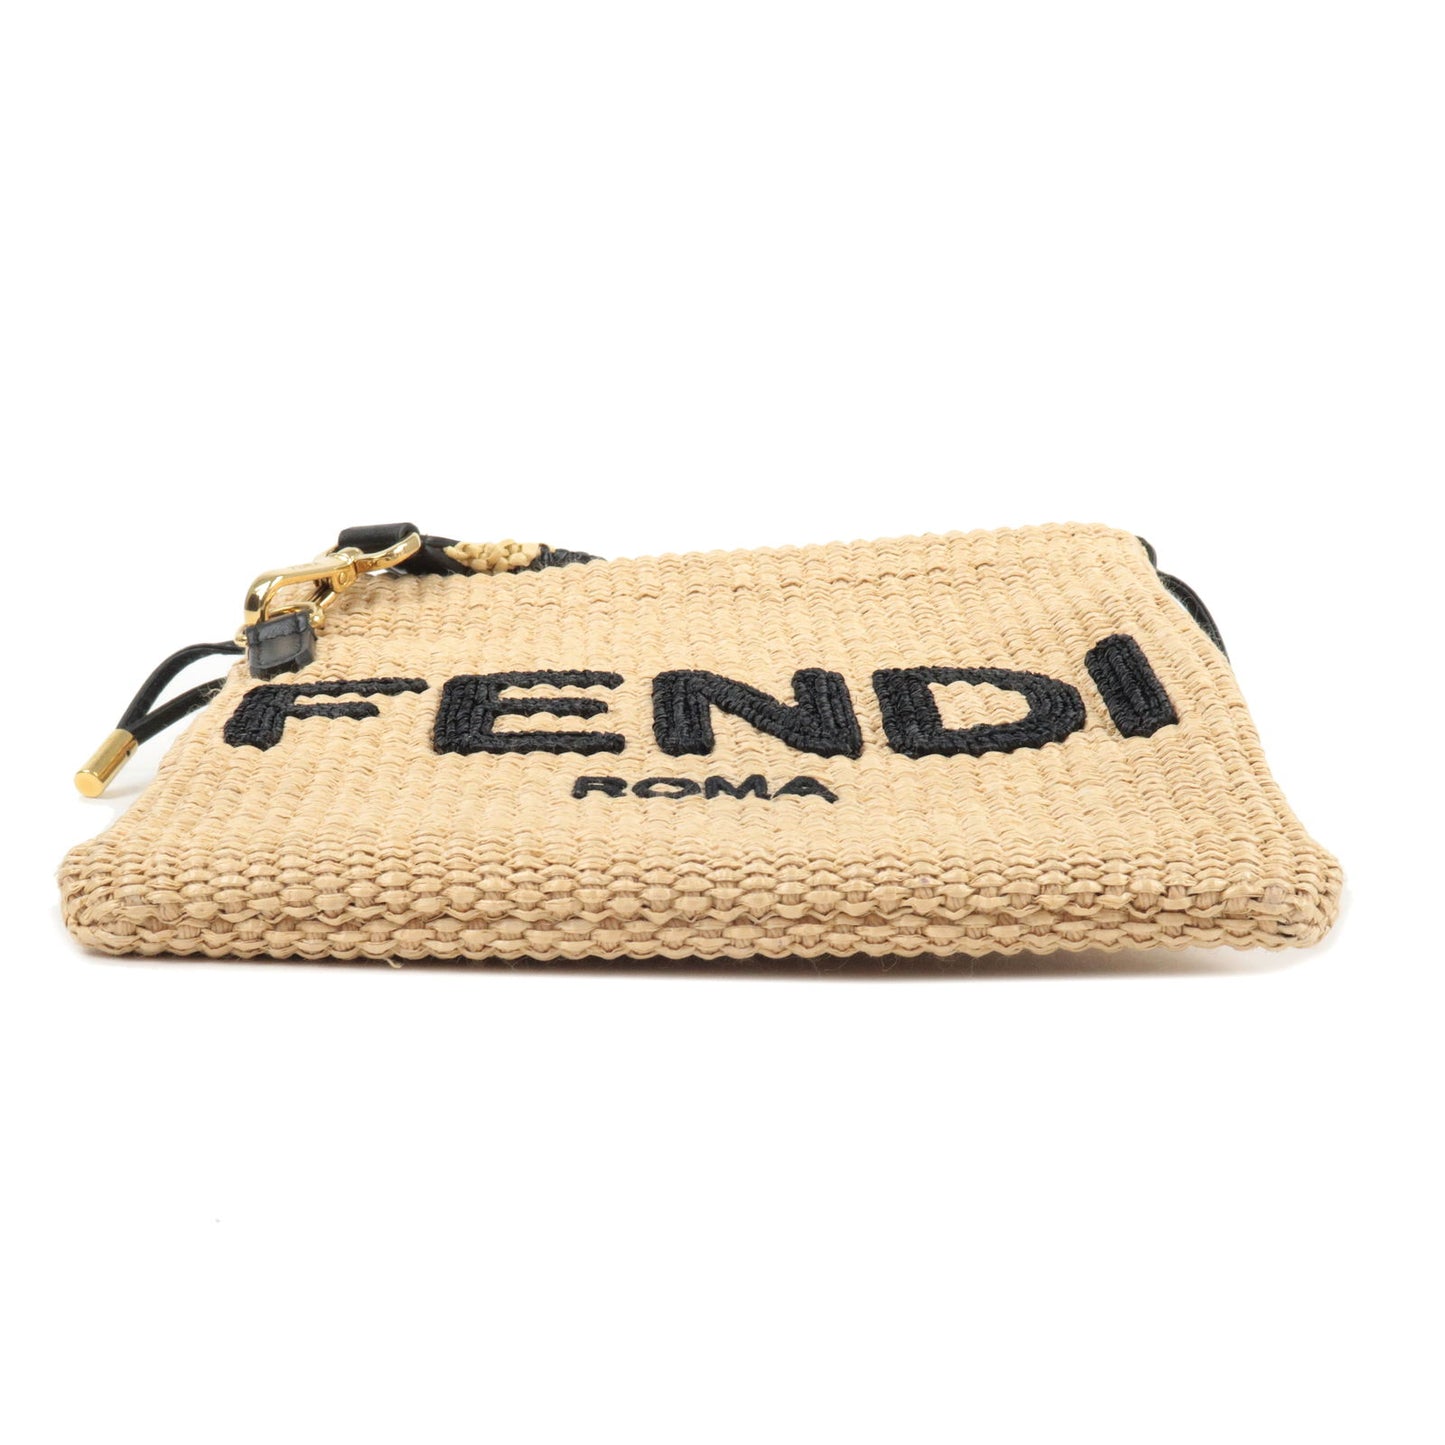 Fendi Straw Purse, Shoulder Bag. Black with Gold Studs